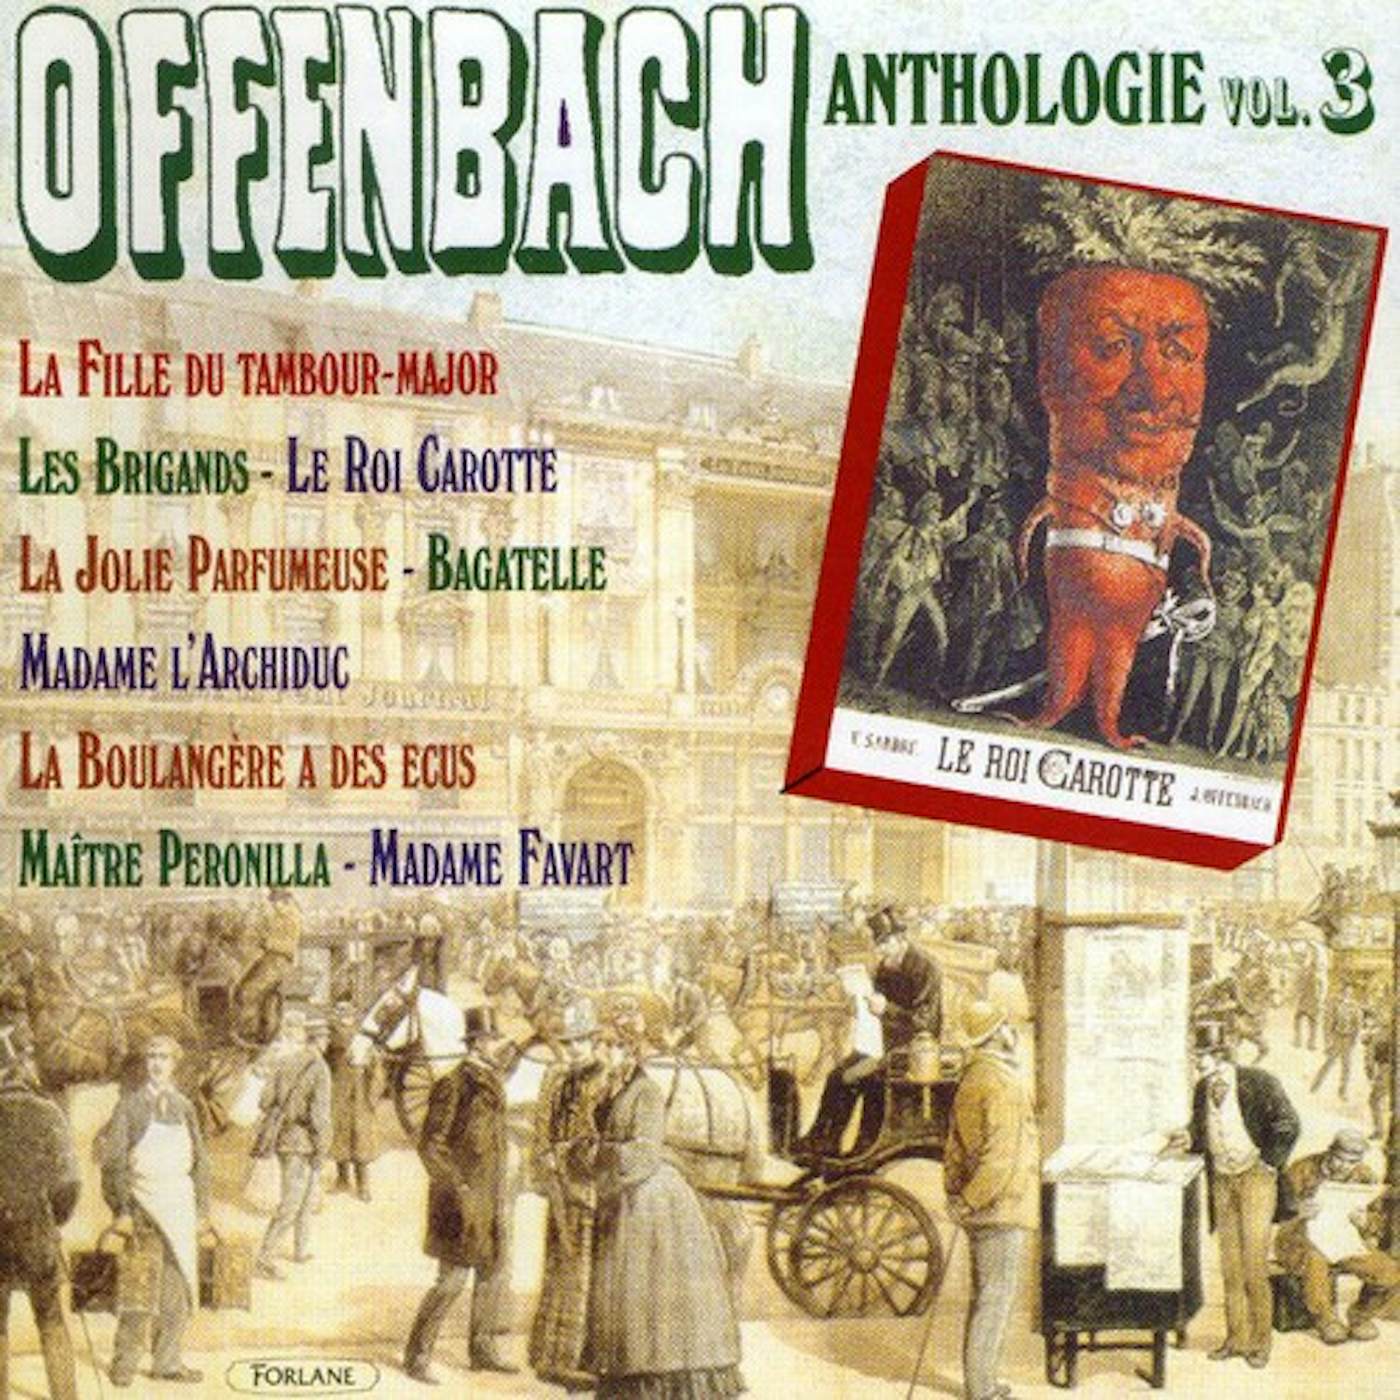 Jacques Offenbach VOL. 3-ANTHOLOGIE CD